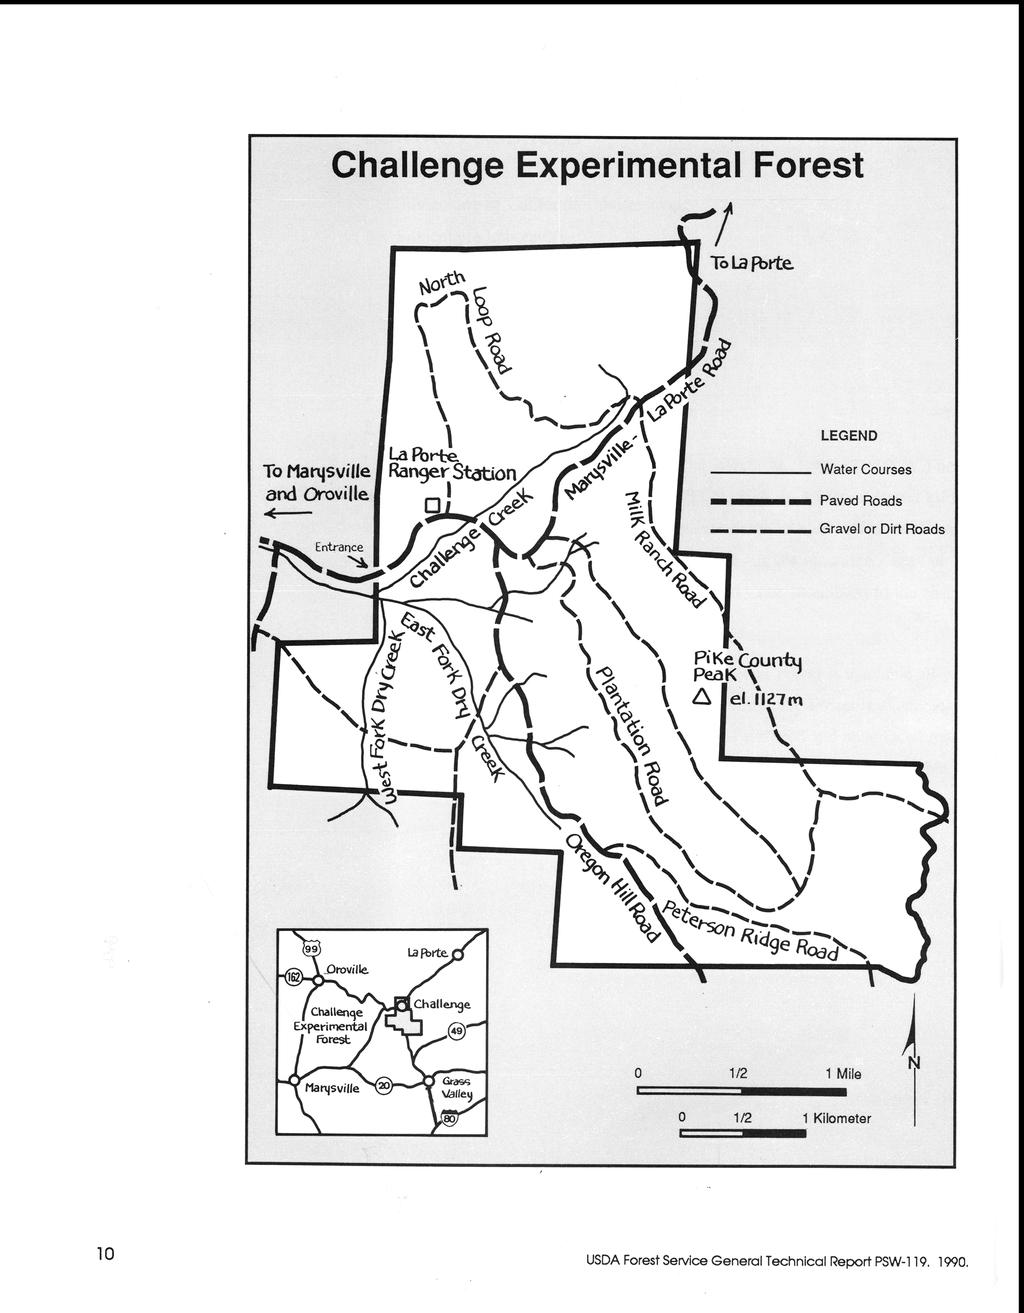 1 Mile 1 Kilometer m 1 USDA Forest